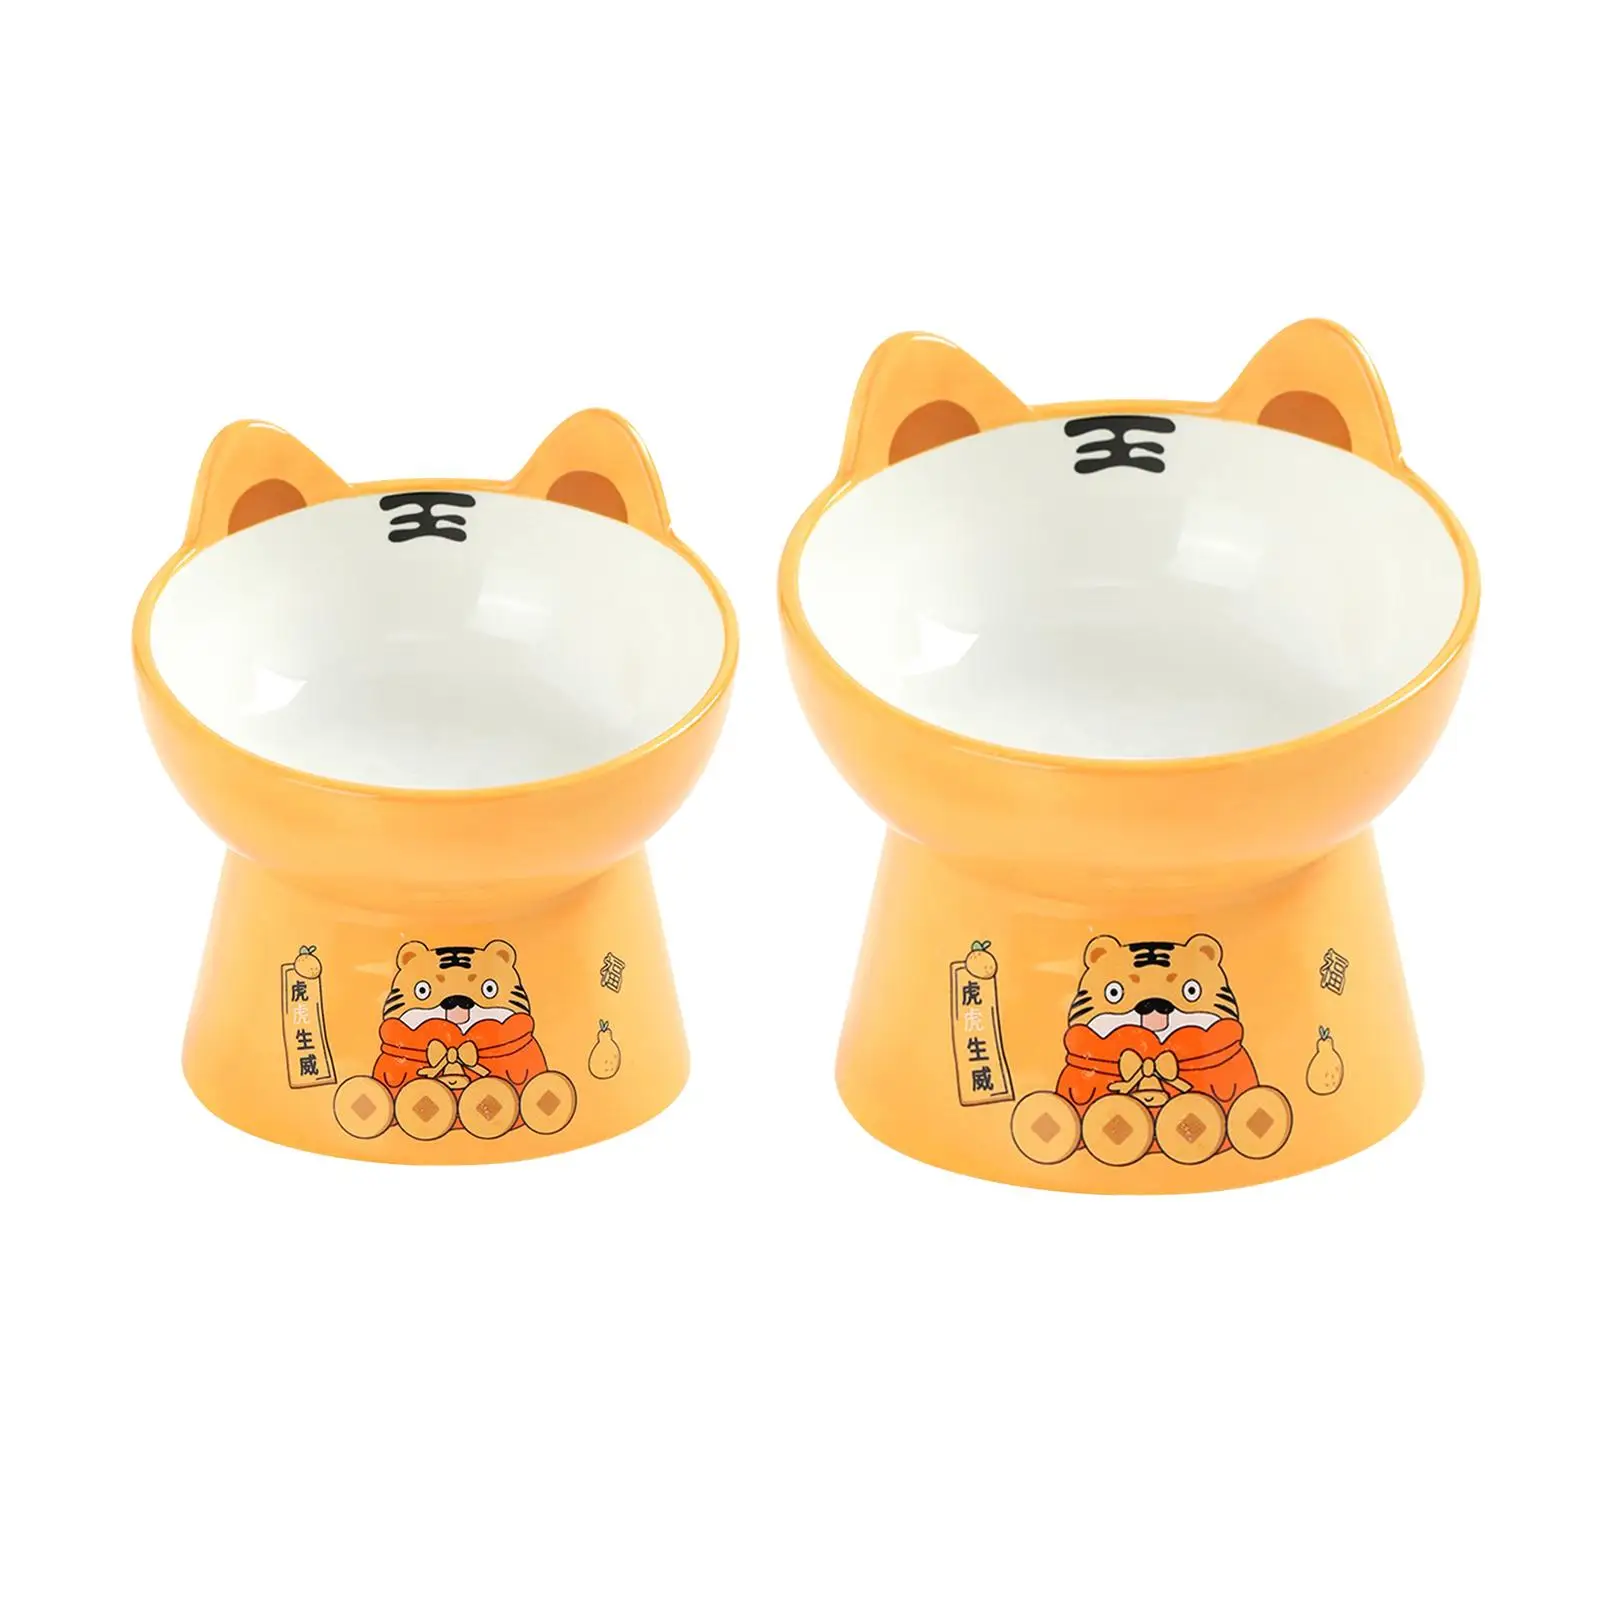 Ceramic Cat Food Bowls, Cat Backflow Preventer, Pet Supplies,